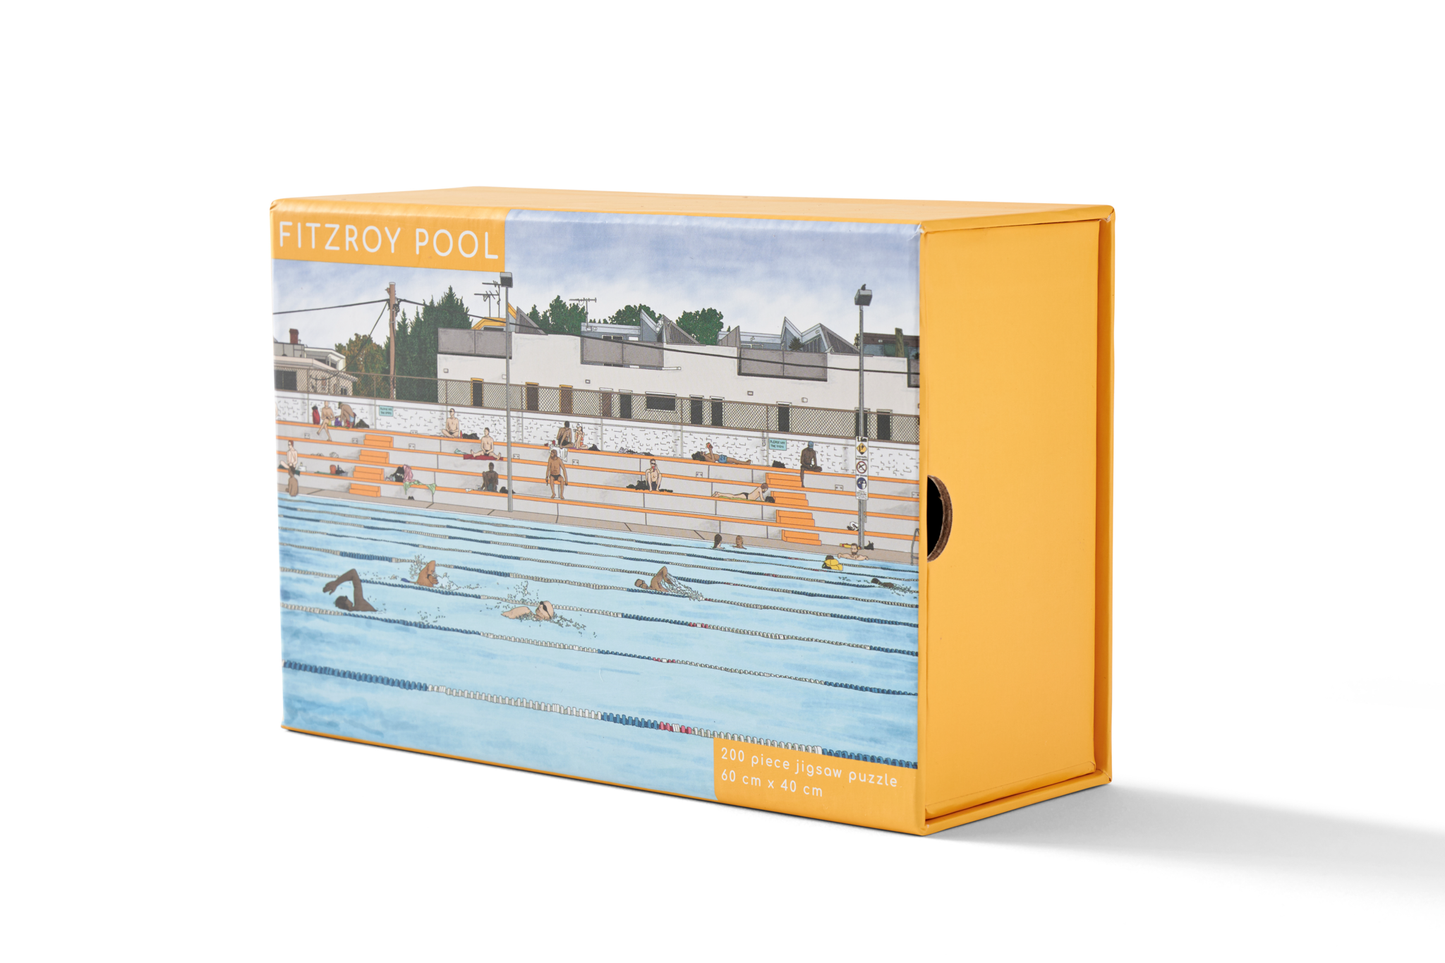 Fitzroy Swimming Pool 